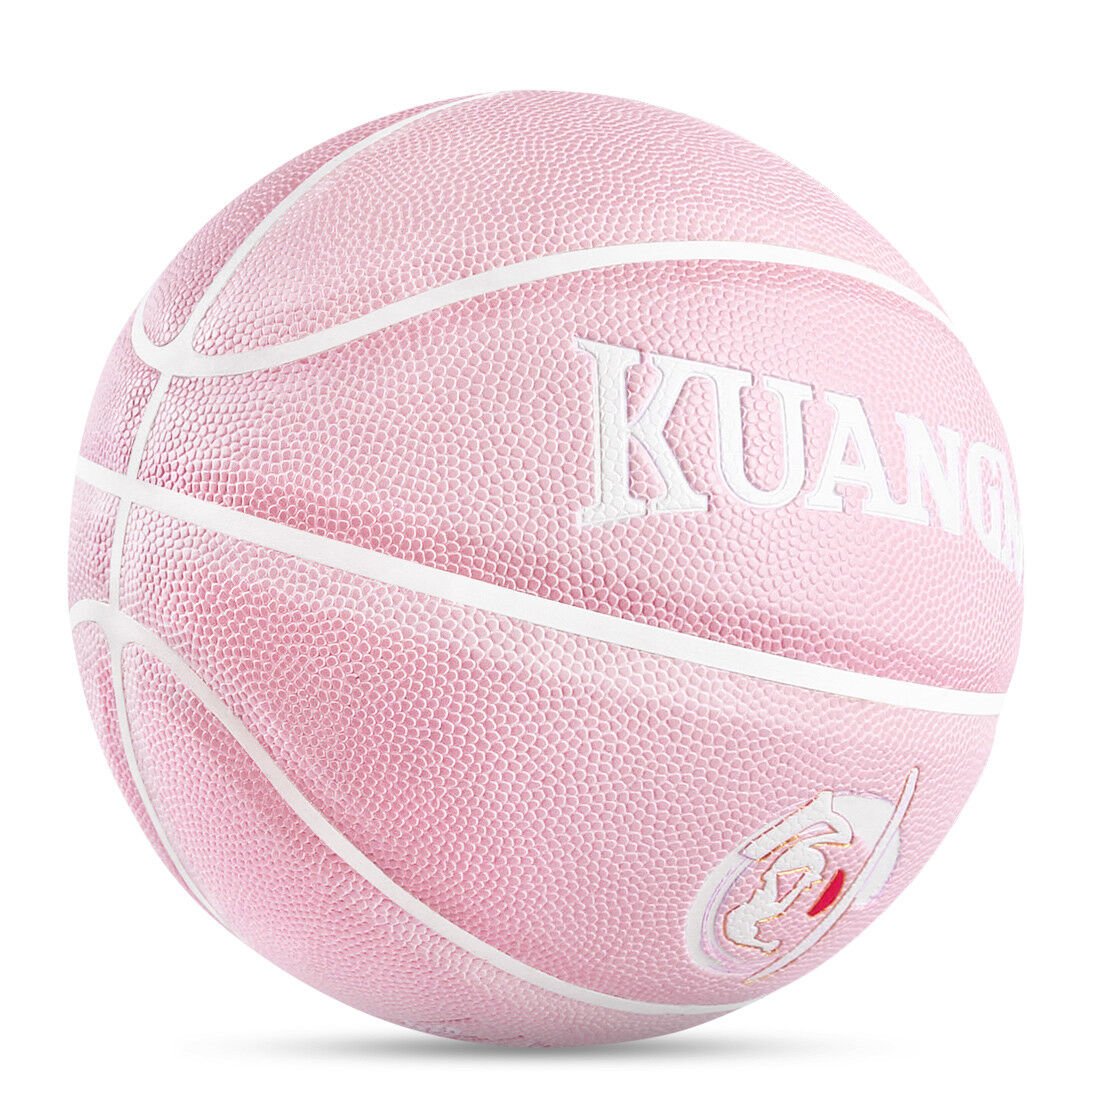 Баскетбольный мяч Nike розовый